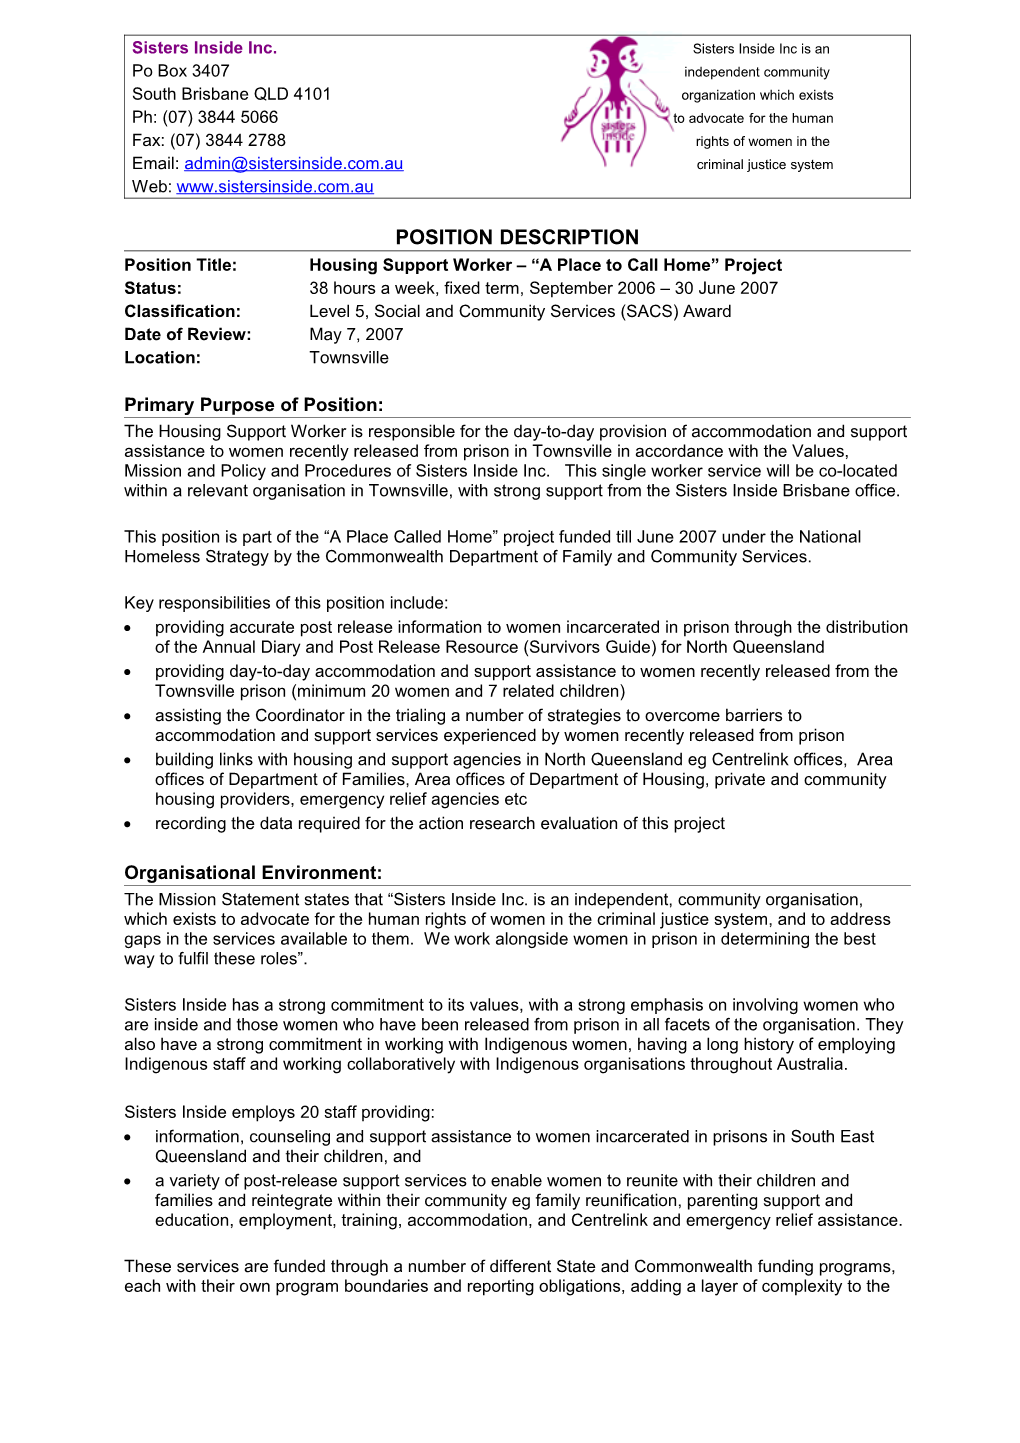 Position Description: Housing Support Worker - Townsville (Draft) 2